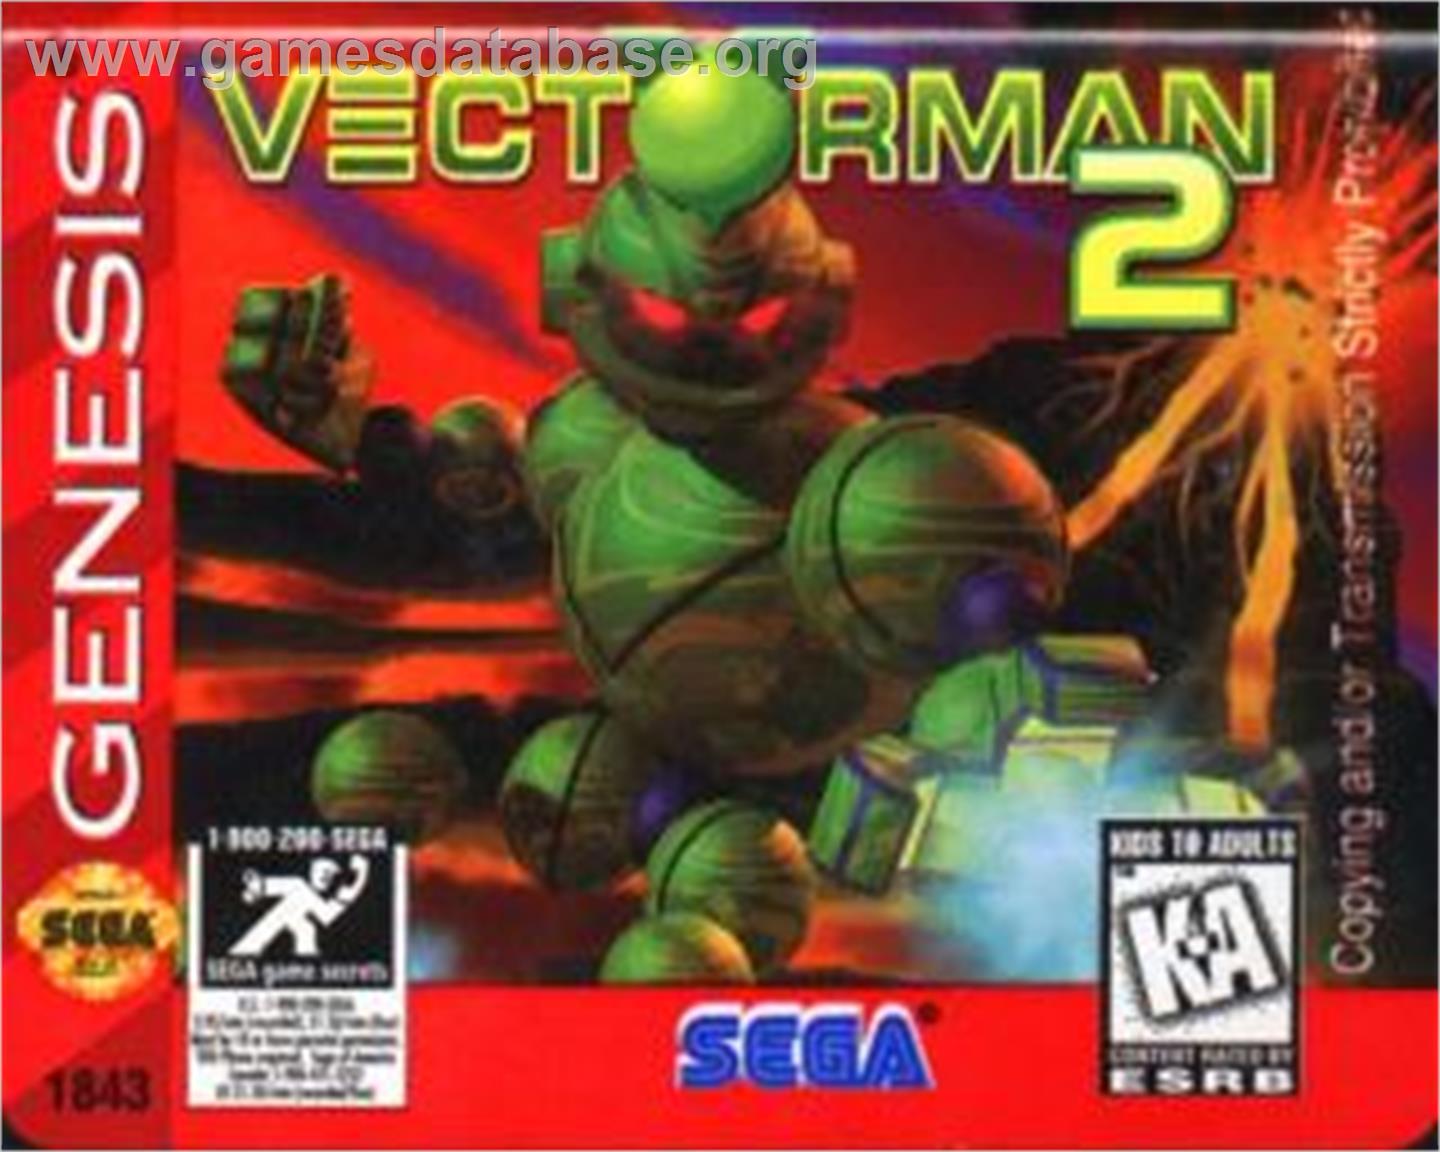 Vectorman 2 - Sega Nomad - Artwork - Cartridge